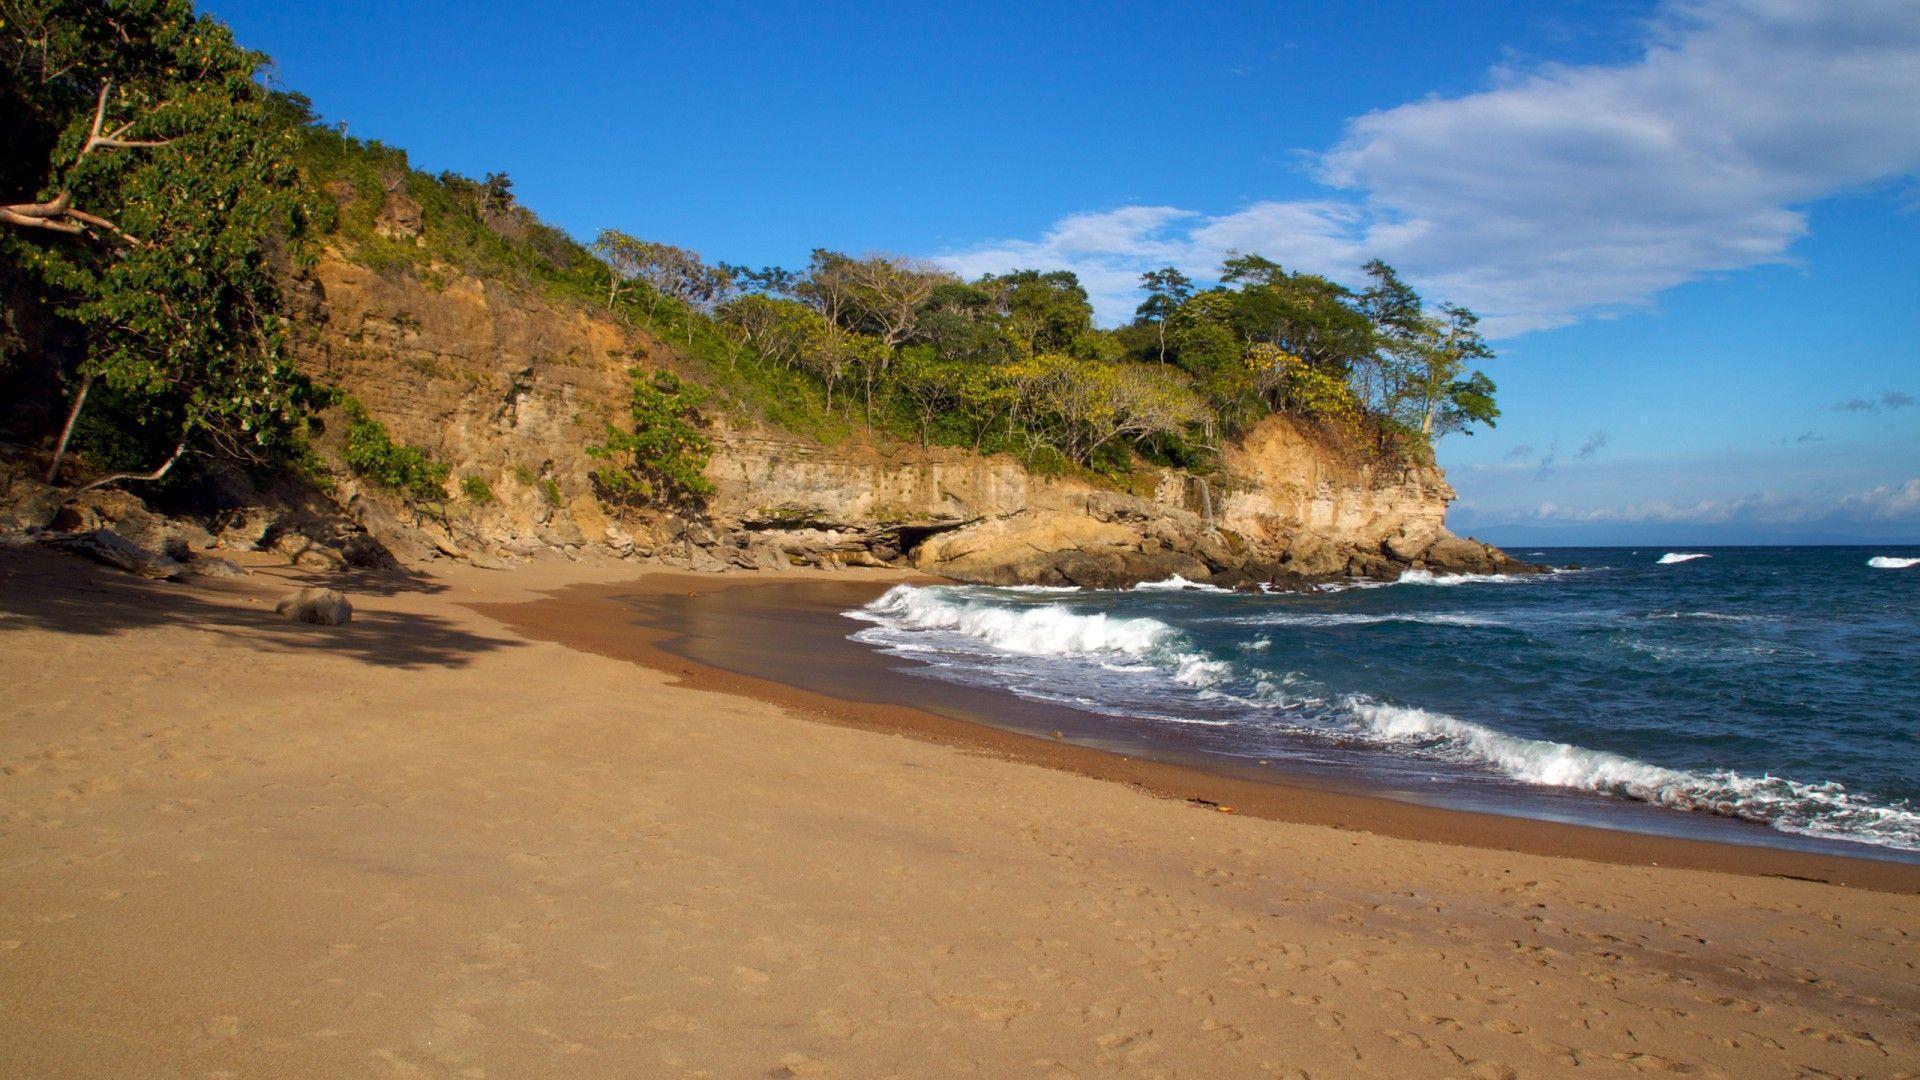 Beach Background In High Quality: Free Costa Rica